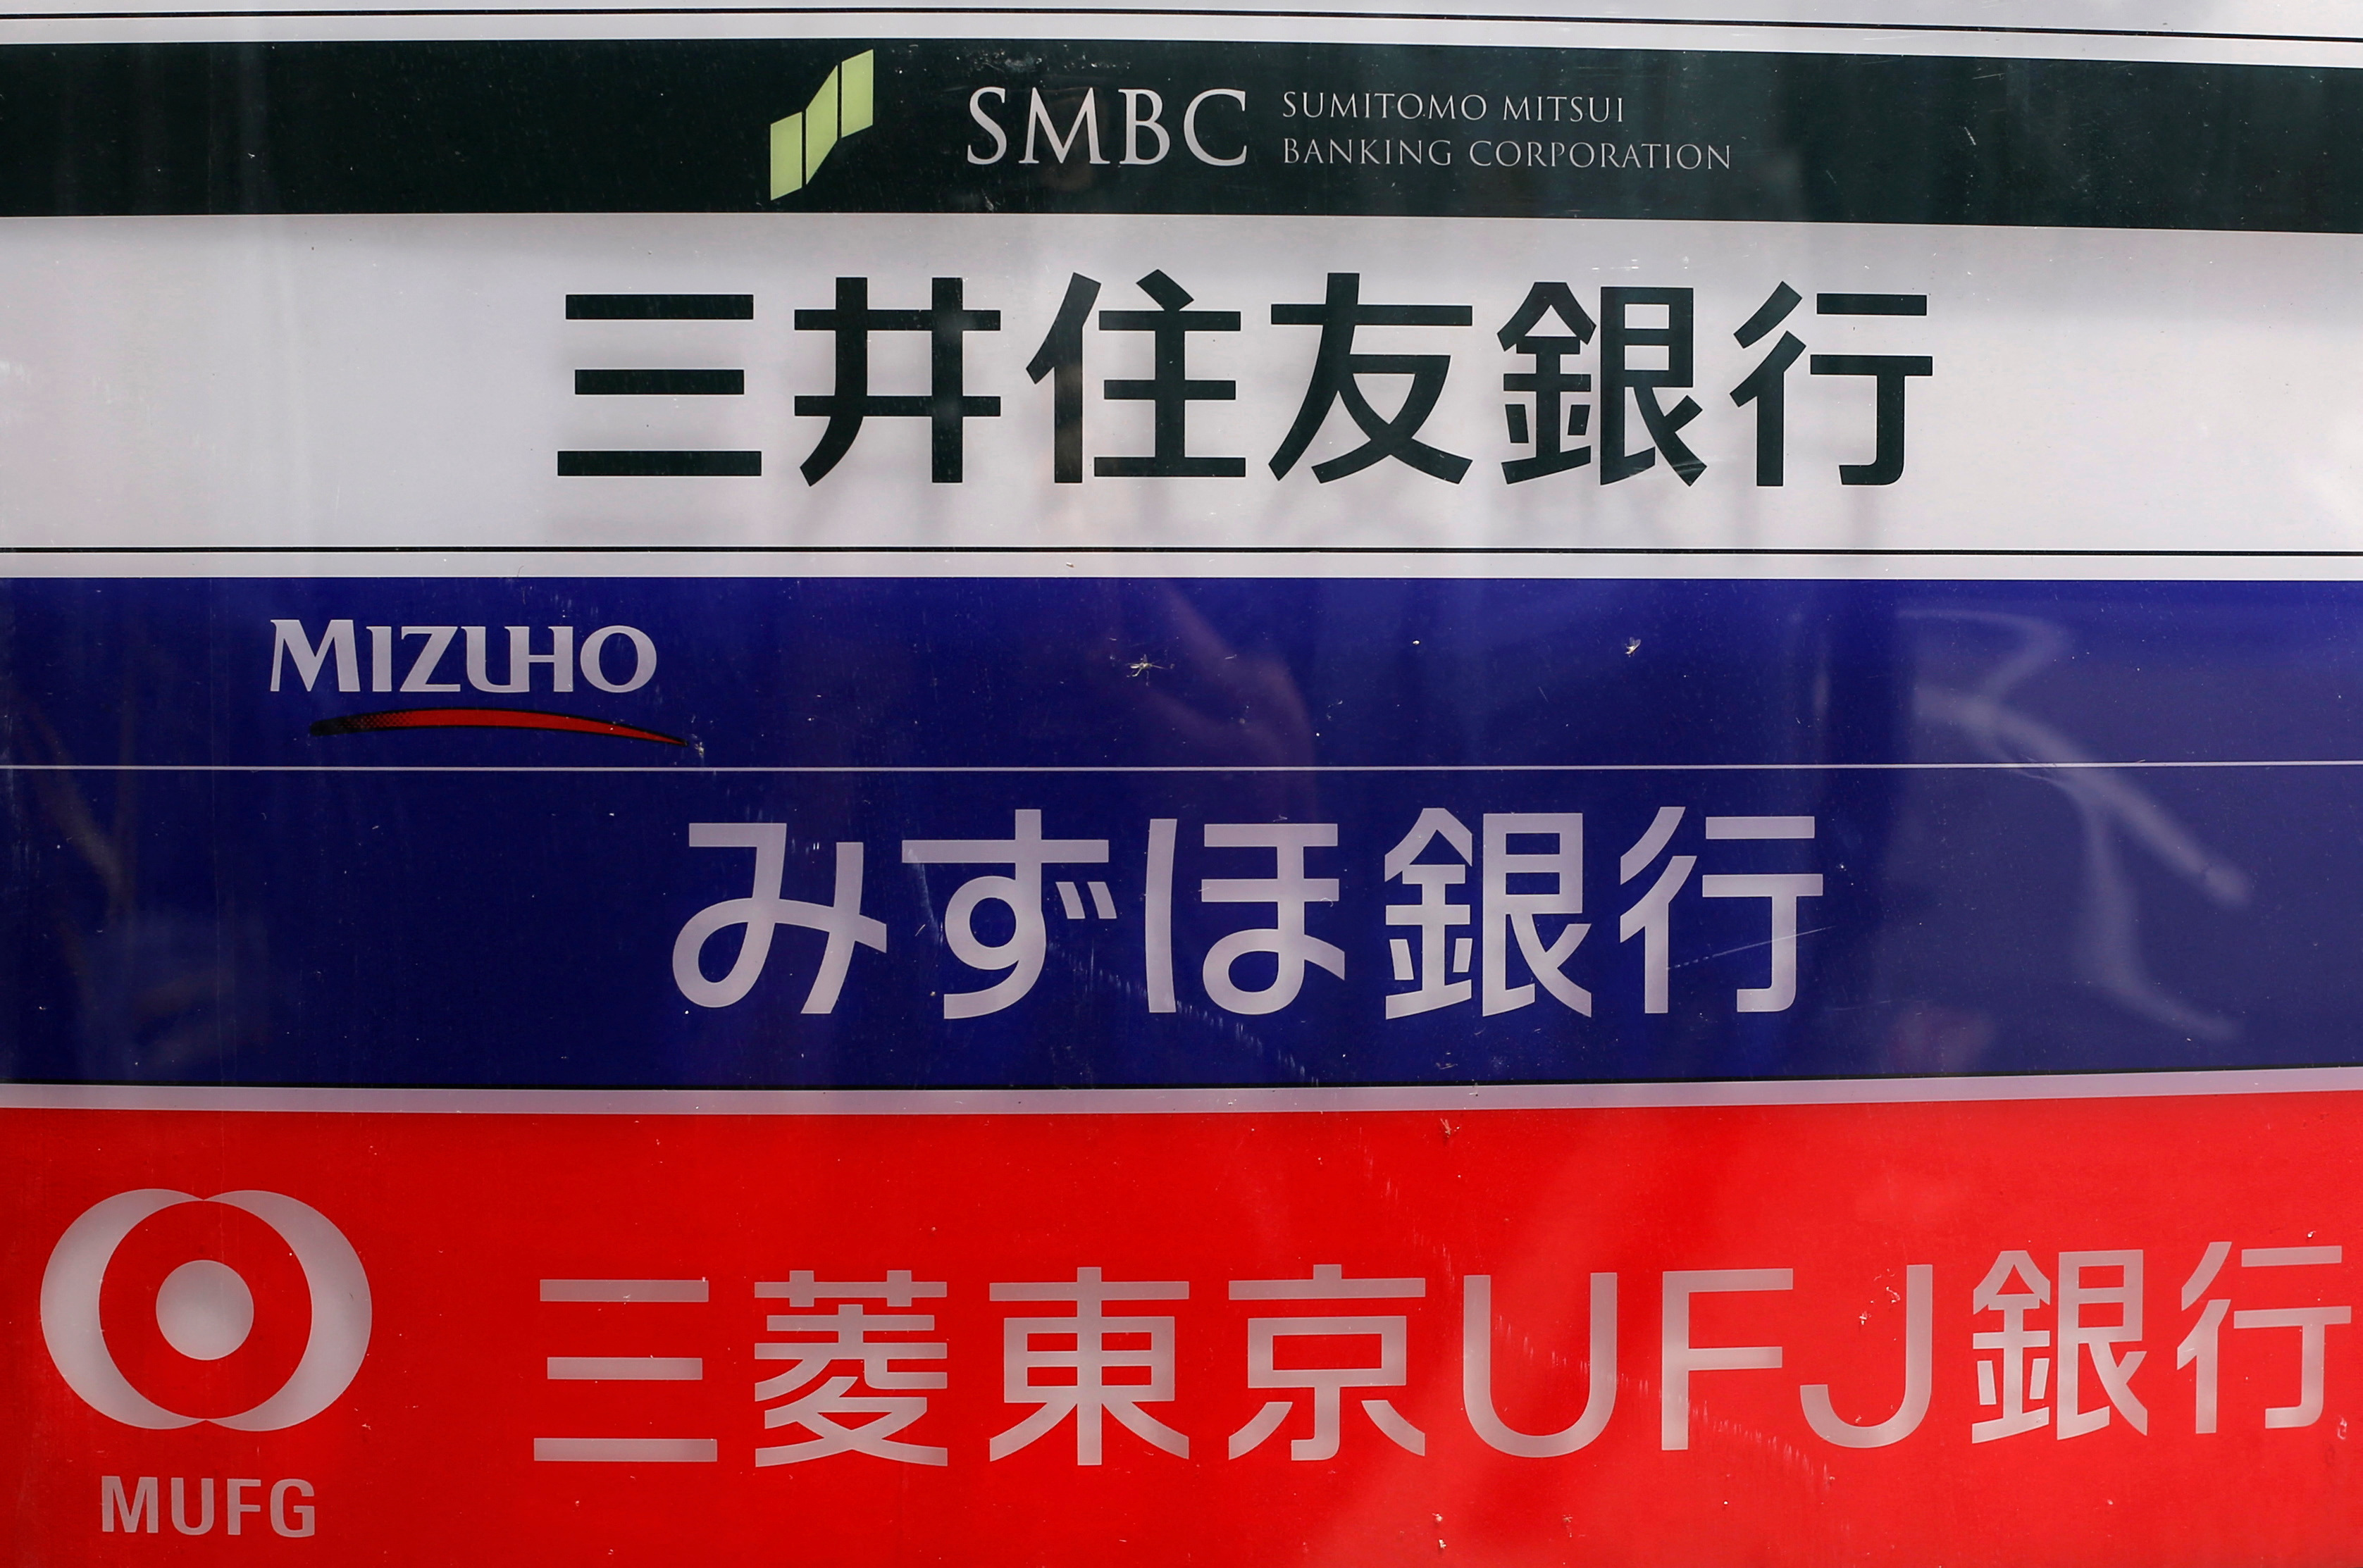 Signboard of Japan's three mega banks, Sumitomo Mitsui Banking Corporation, Mizuho Bank and Bank of Tokyo-Mitsubishi UFJ, is pictured in Tokyo